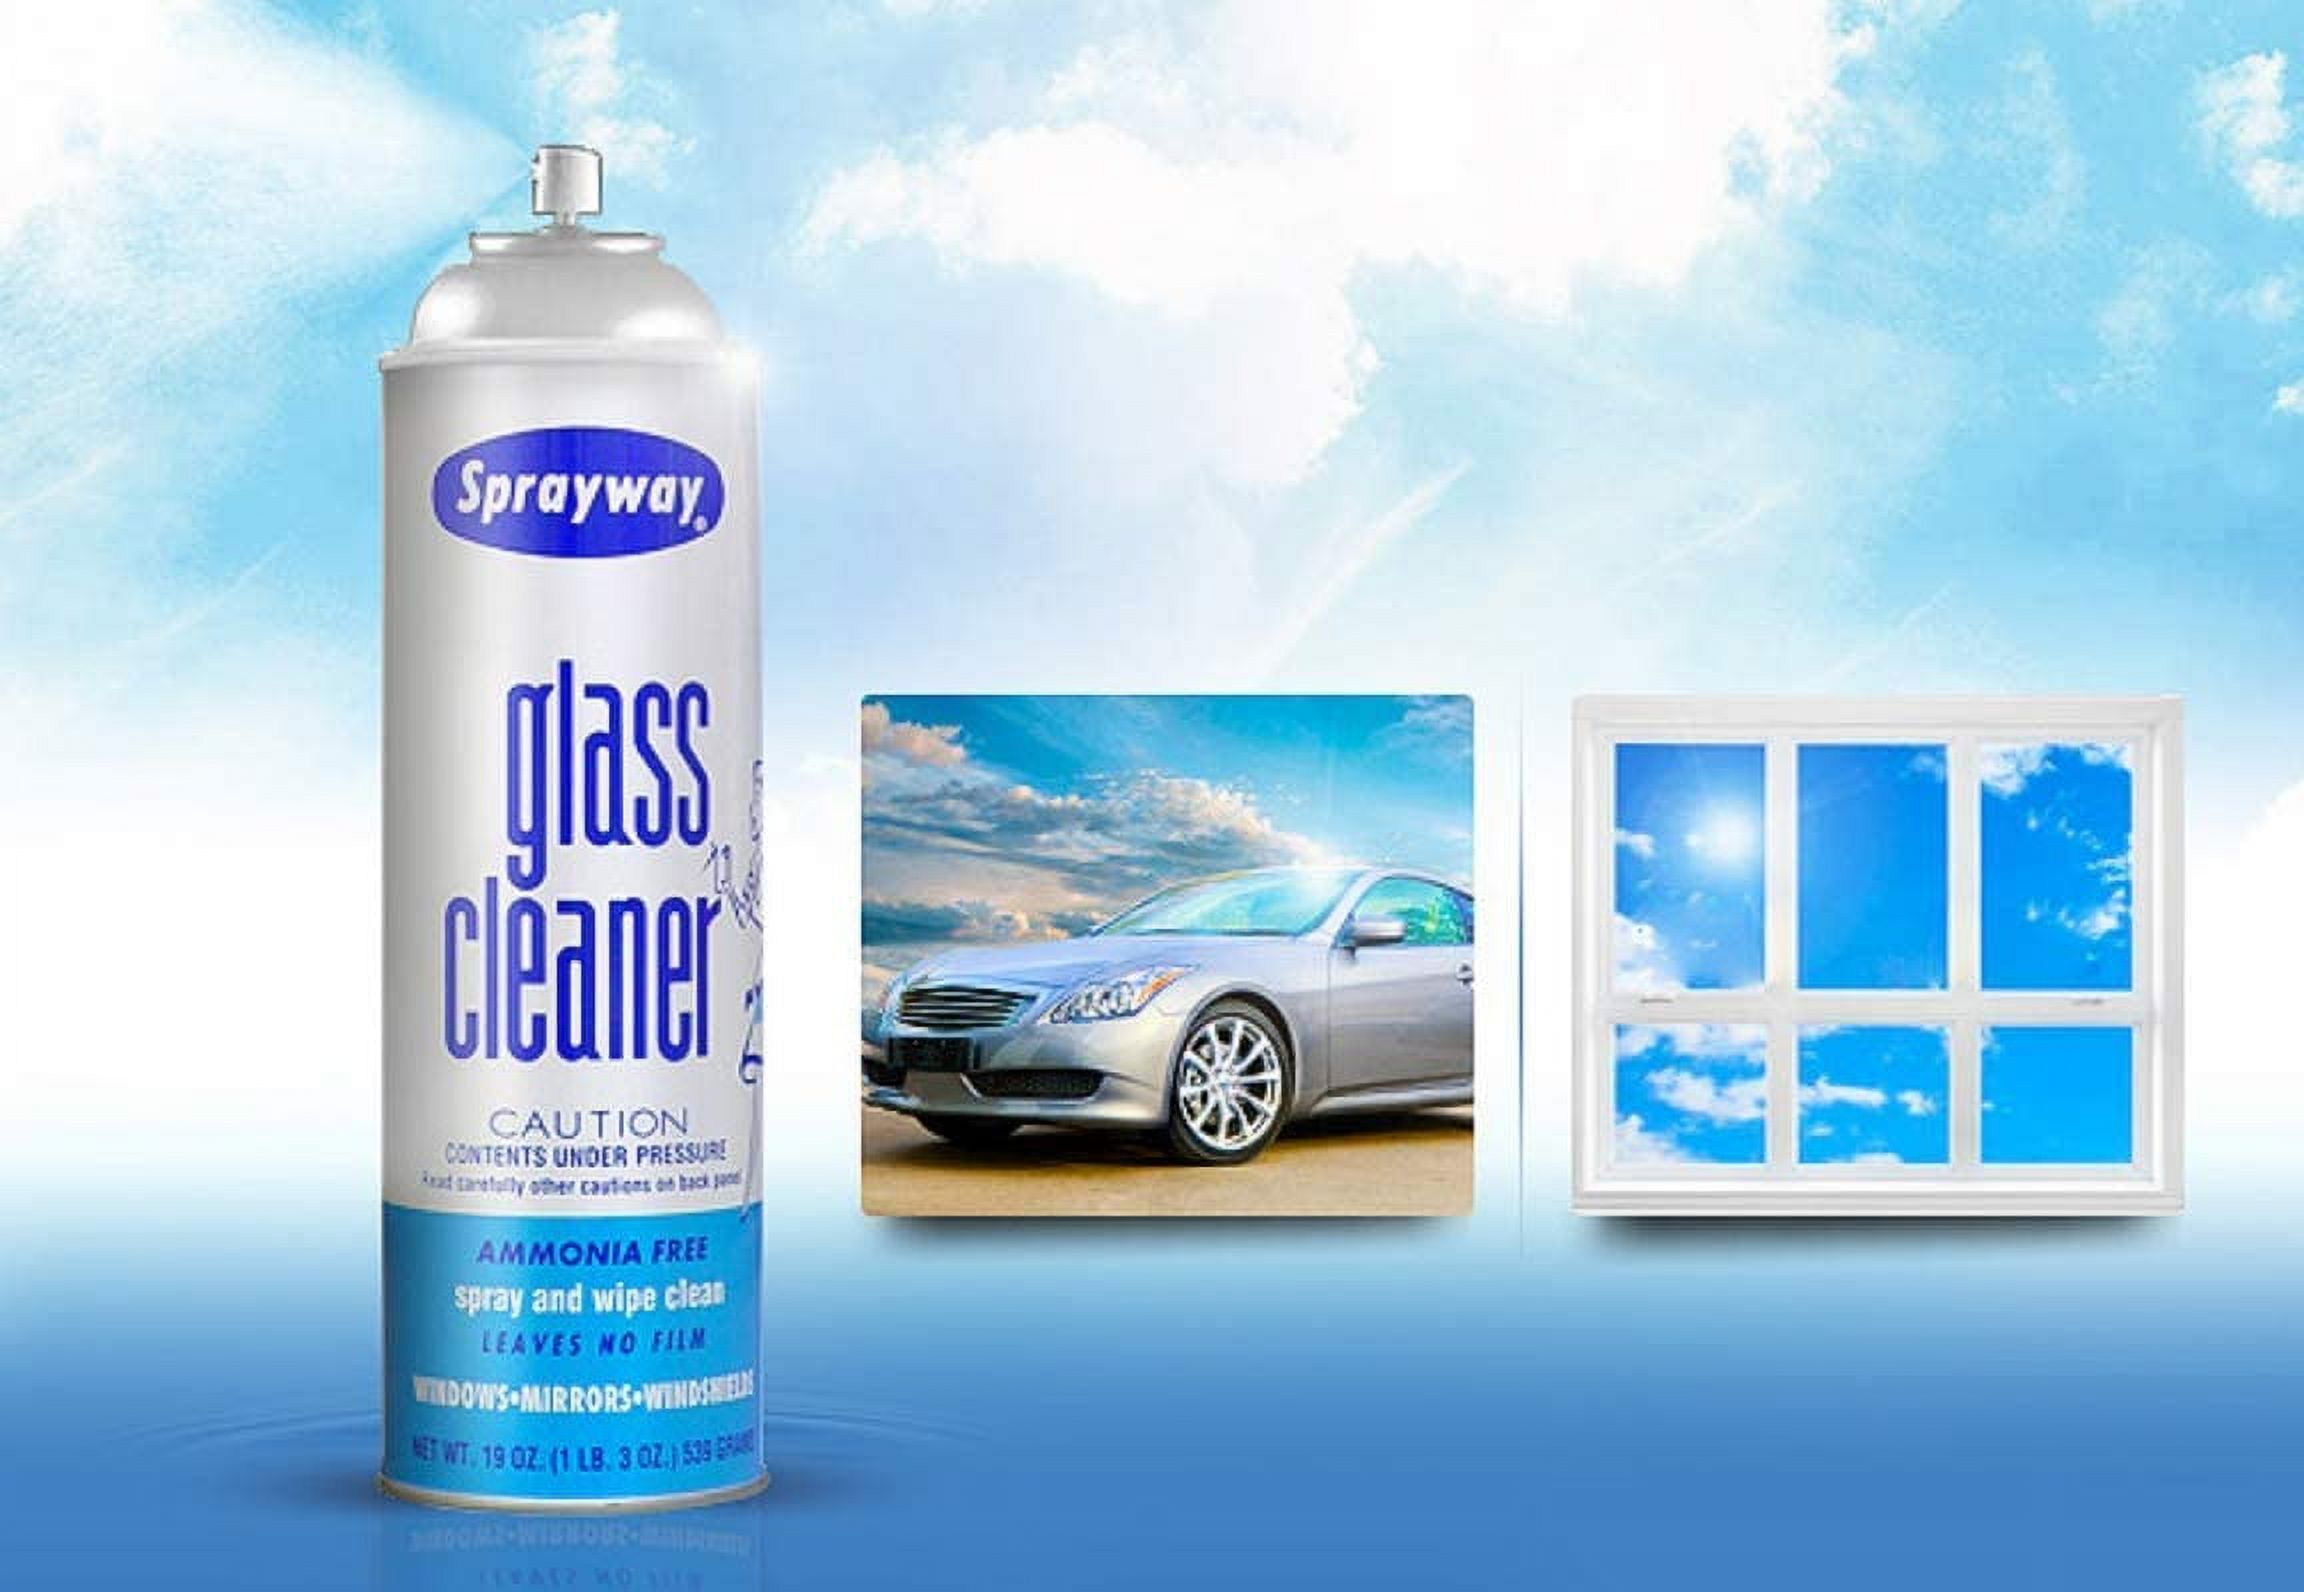 Save on Sprayway Ammonia Free Glass Cleaner Aerosol Spray Order